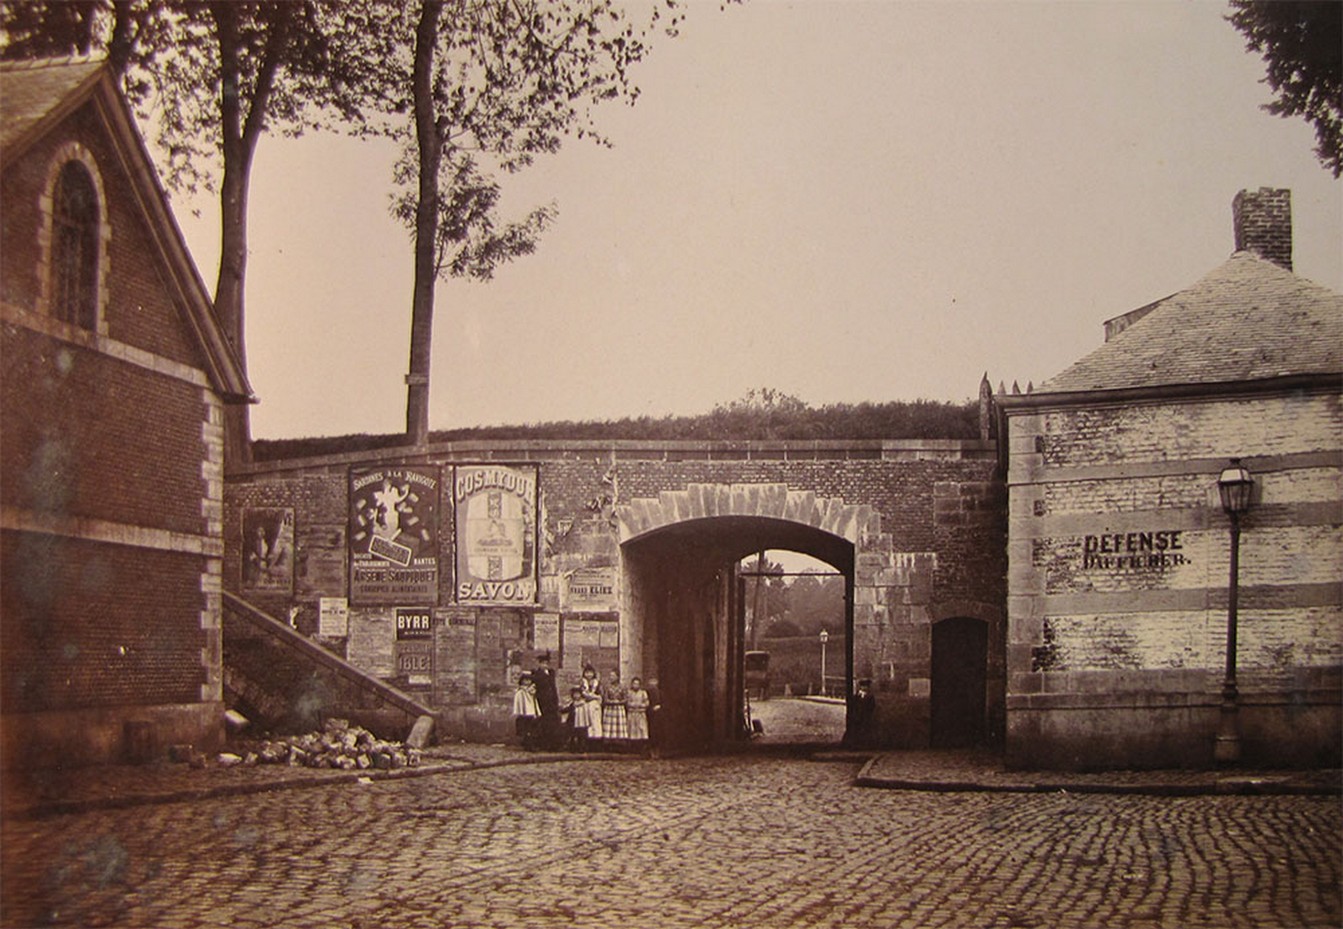 Remparts de Landrecies, porte du Quesnoy